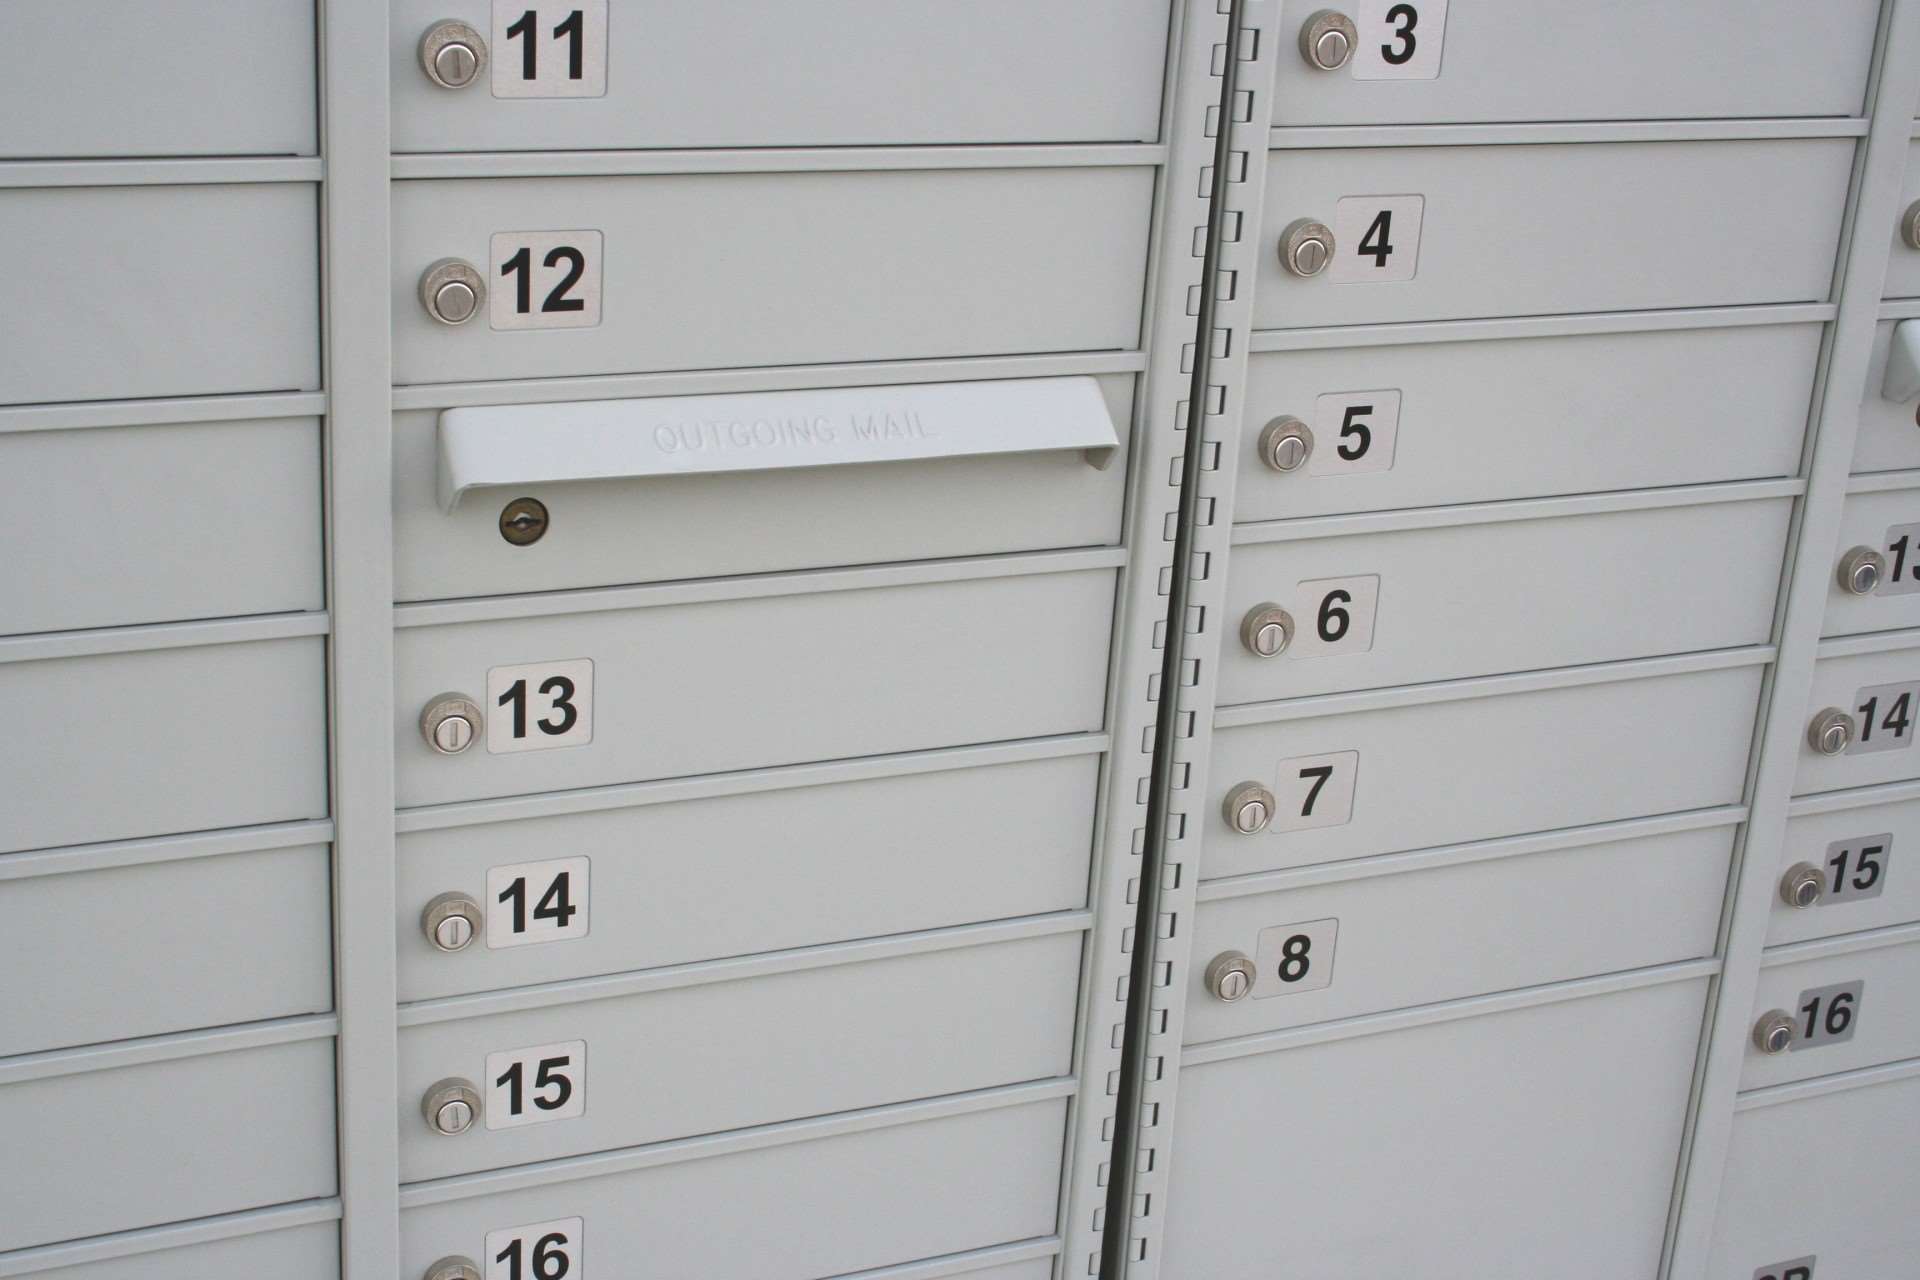 P.O. Box alternative address